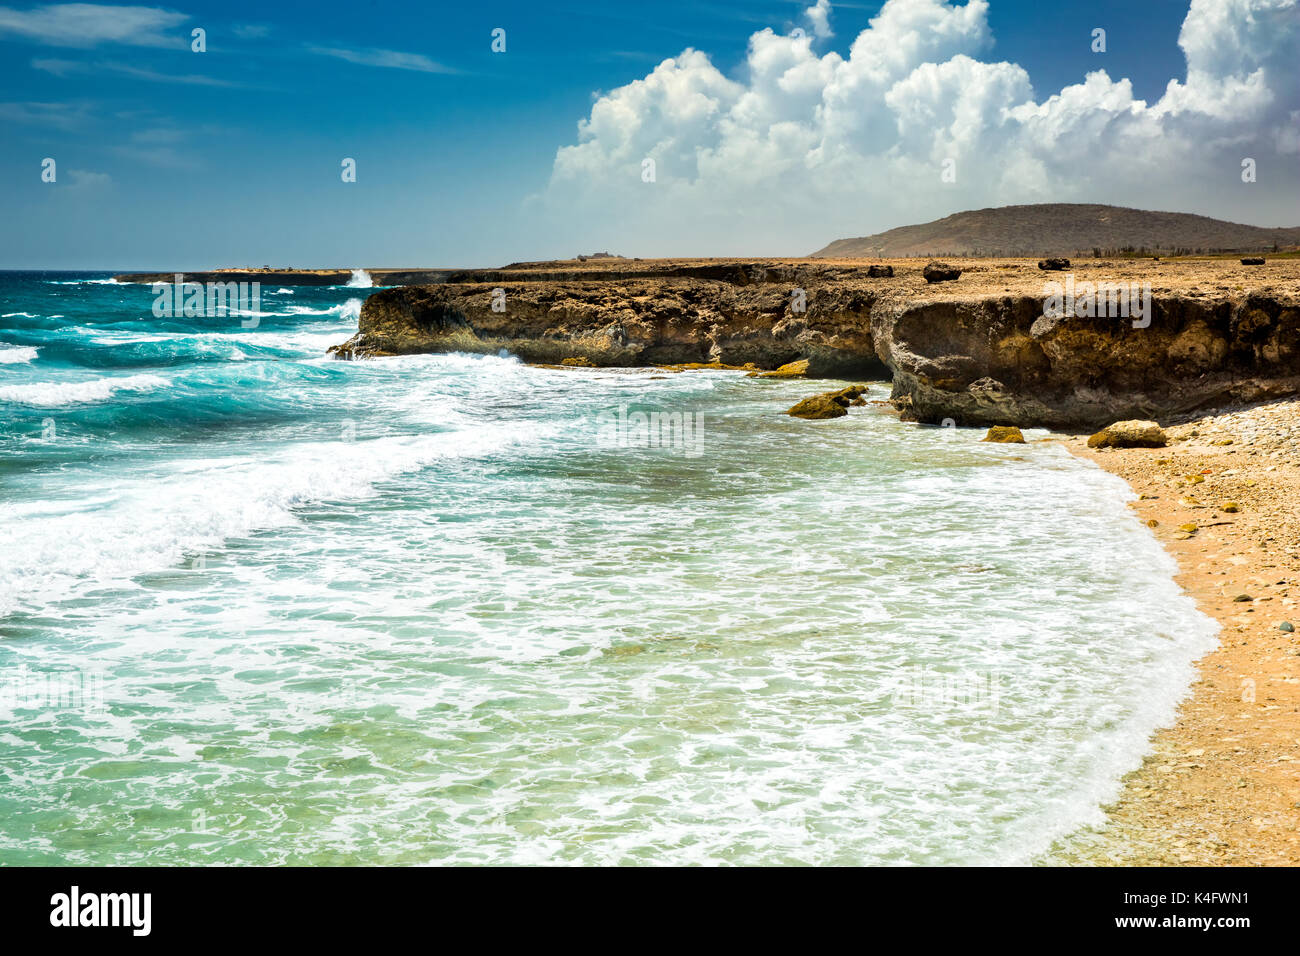 Sunny summer day with blue sky on the eastern shore of Aruba. Foamy waves splash the rocky beach. Stock Photo